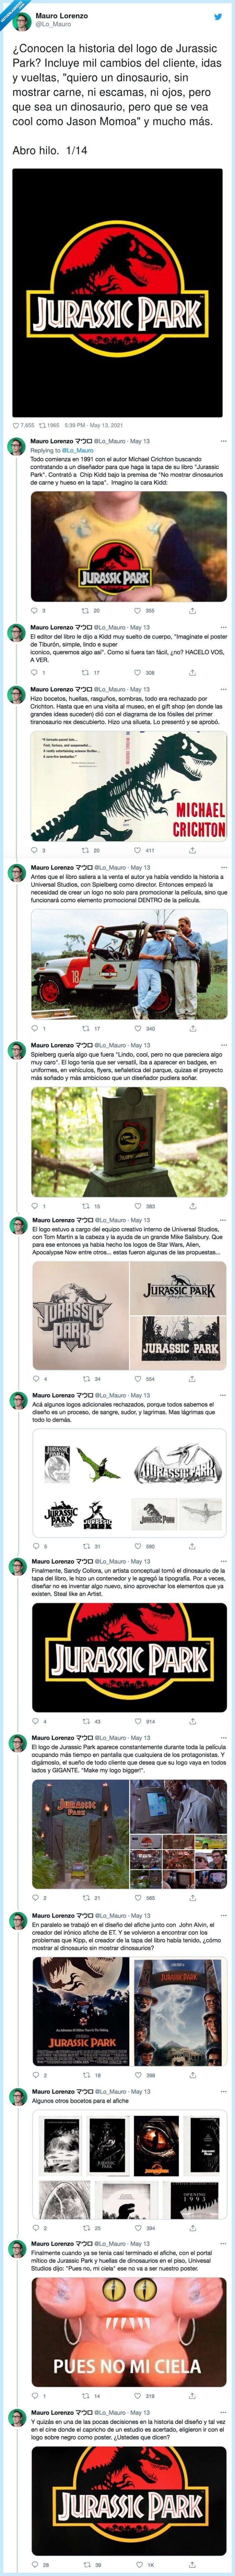 dinosaurio,escamas,cliente,historia,jurassic park,logo